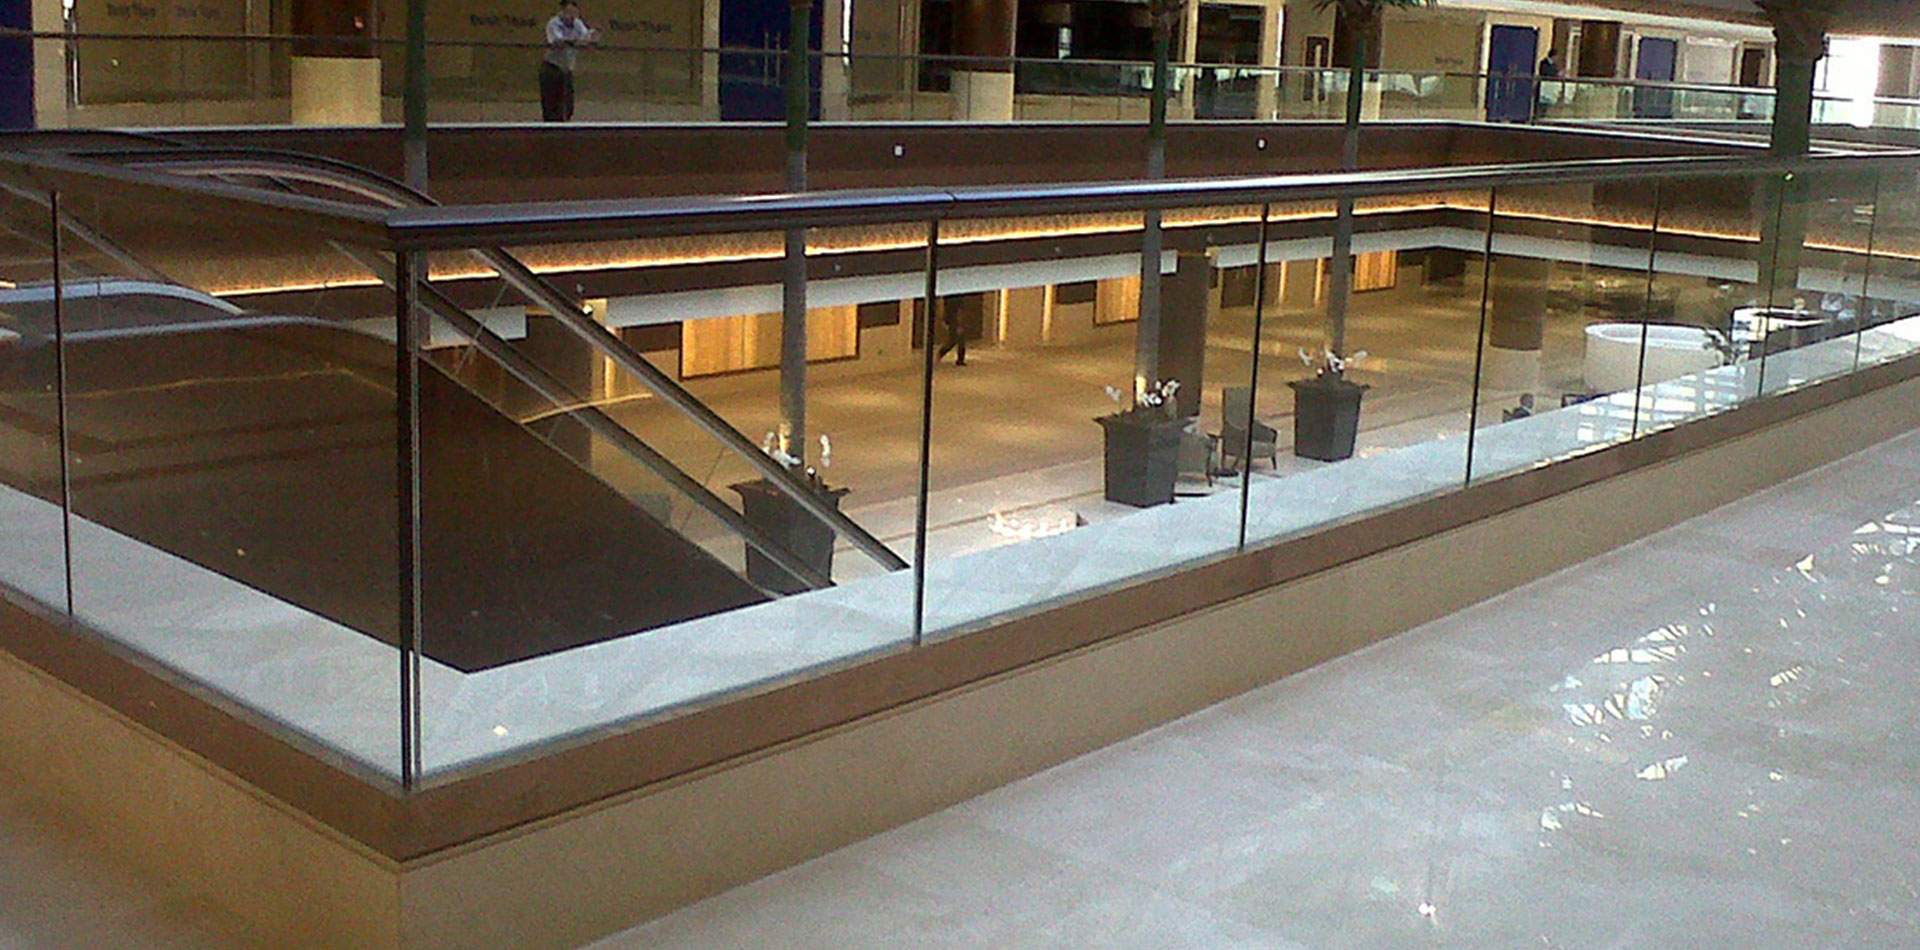 Glass balustrade of the single floor